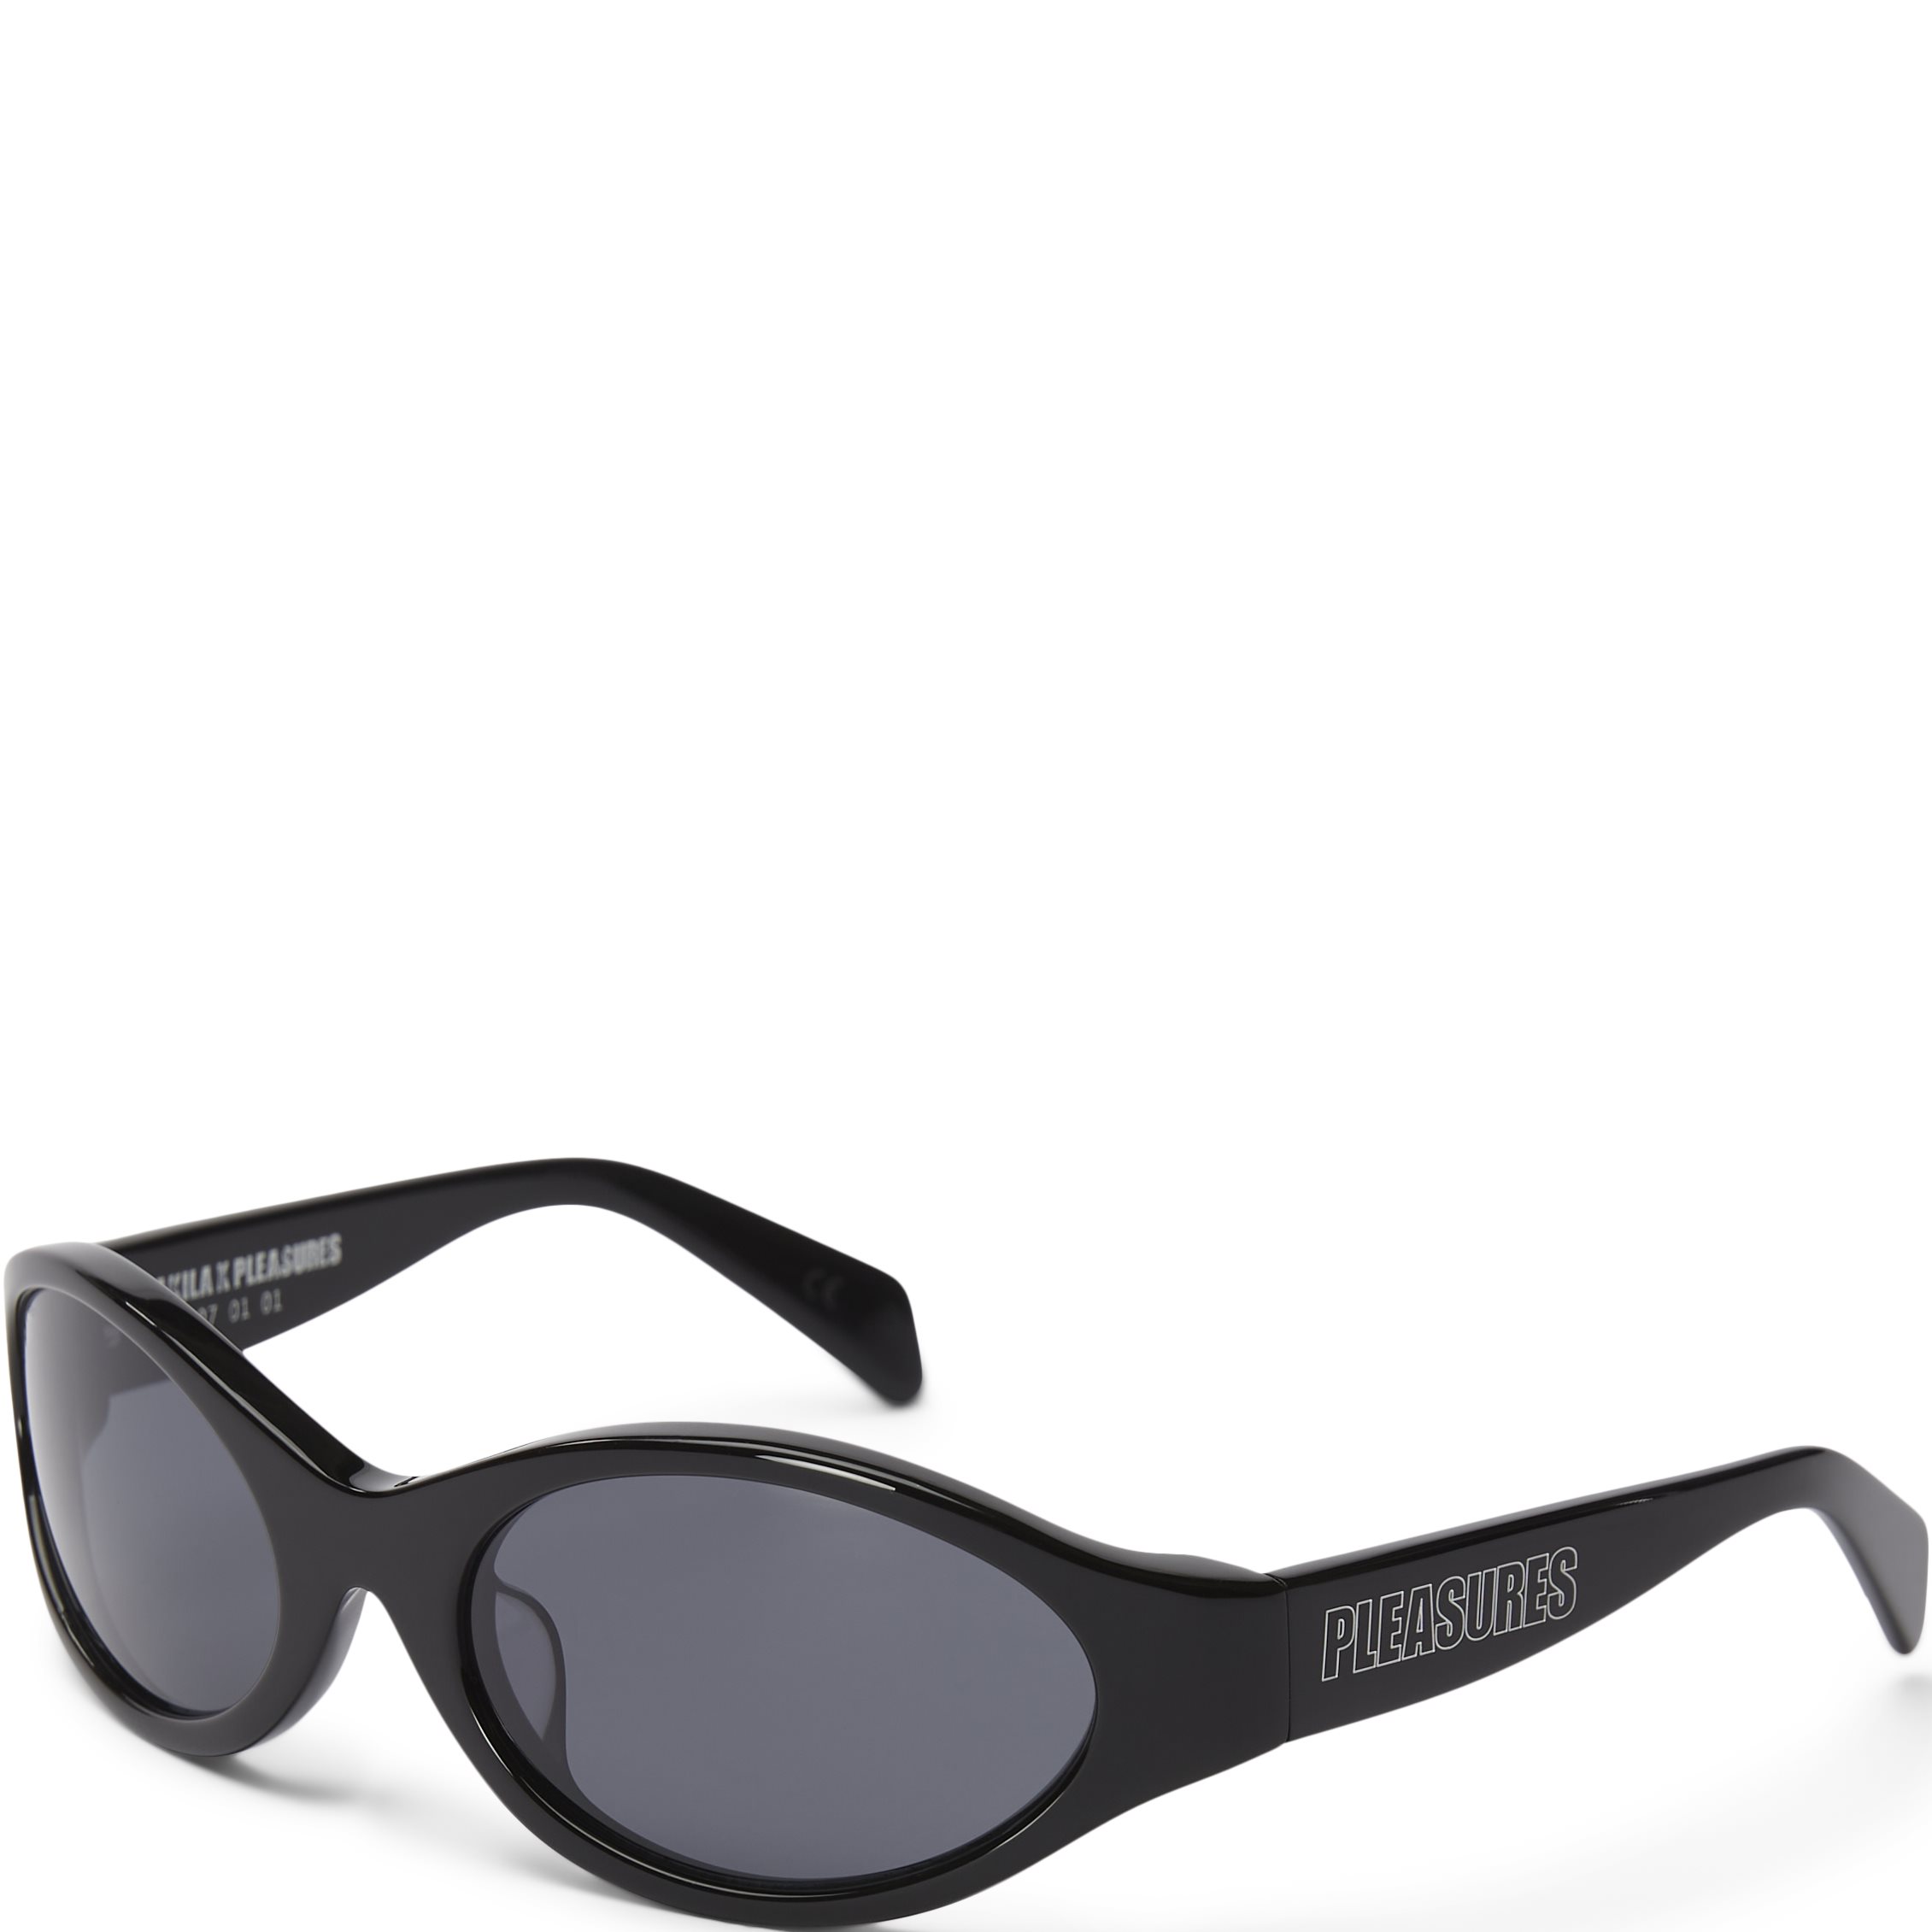 Reflex solglasögon - Accessoarer - Svart